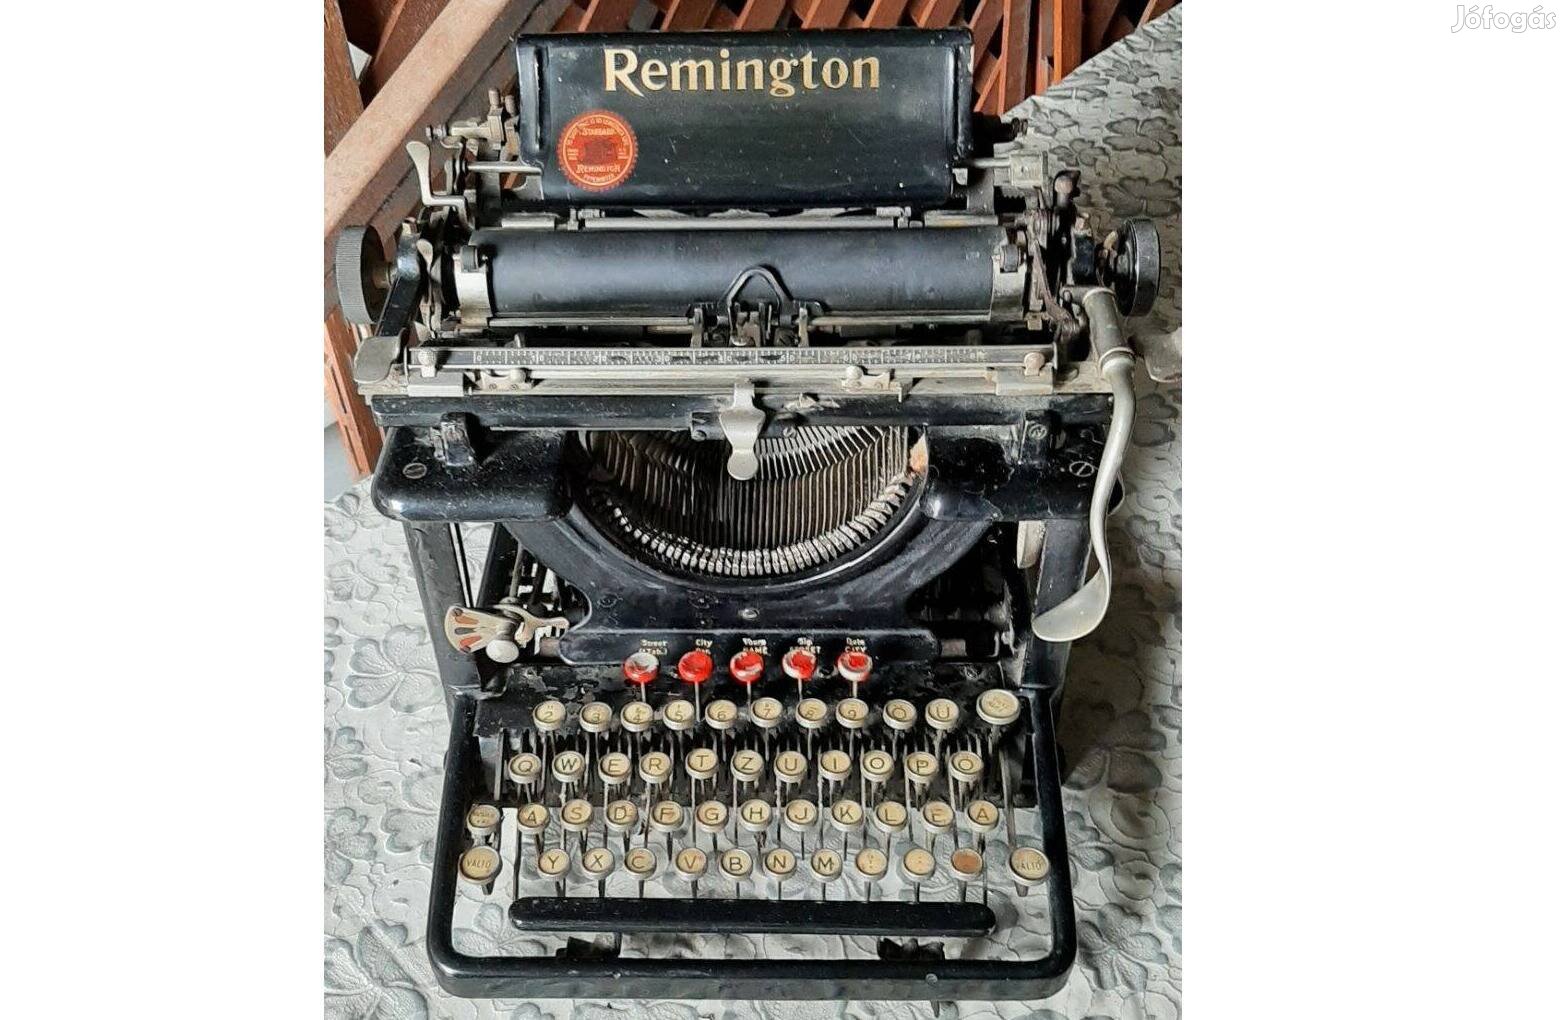 Remington antik nosztalgia írógép